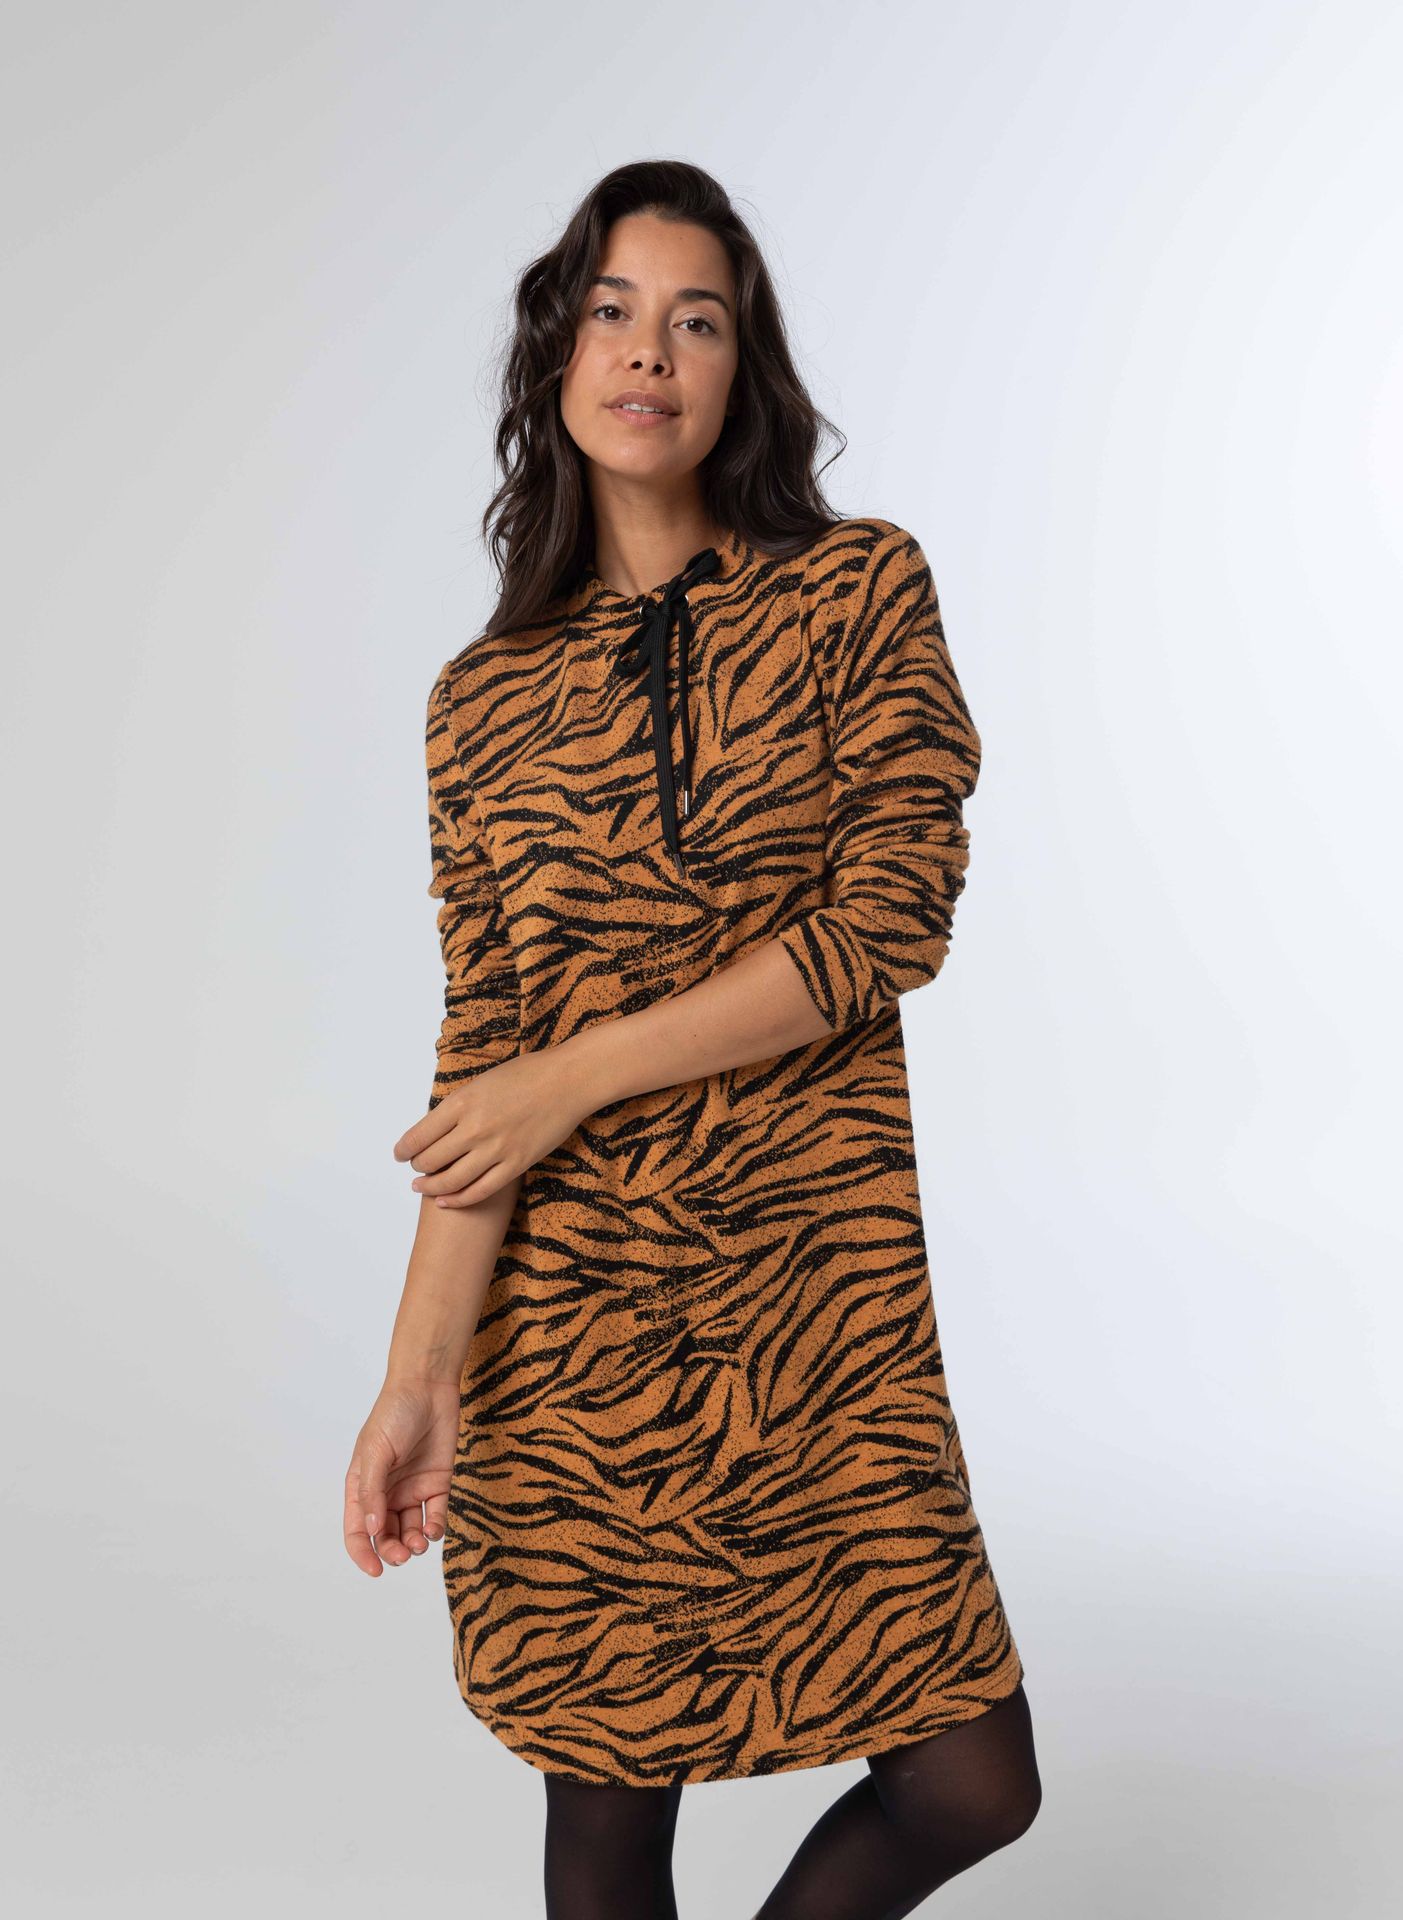 Norah Jurk bruin tijger cinnamon multicolor 211874-276